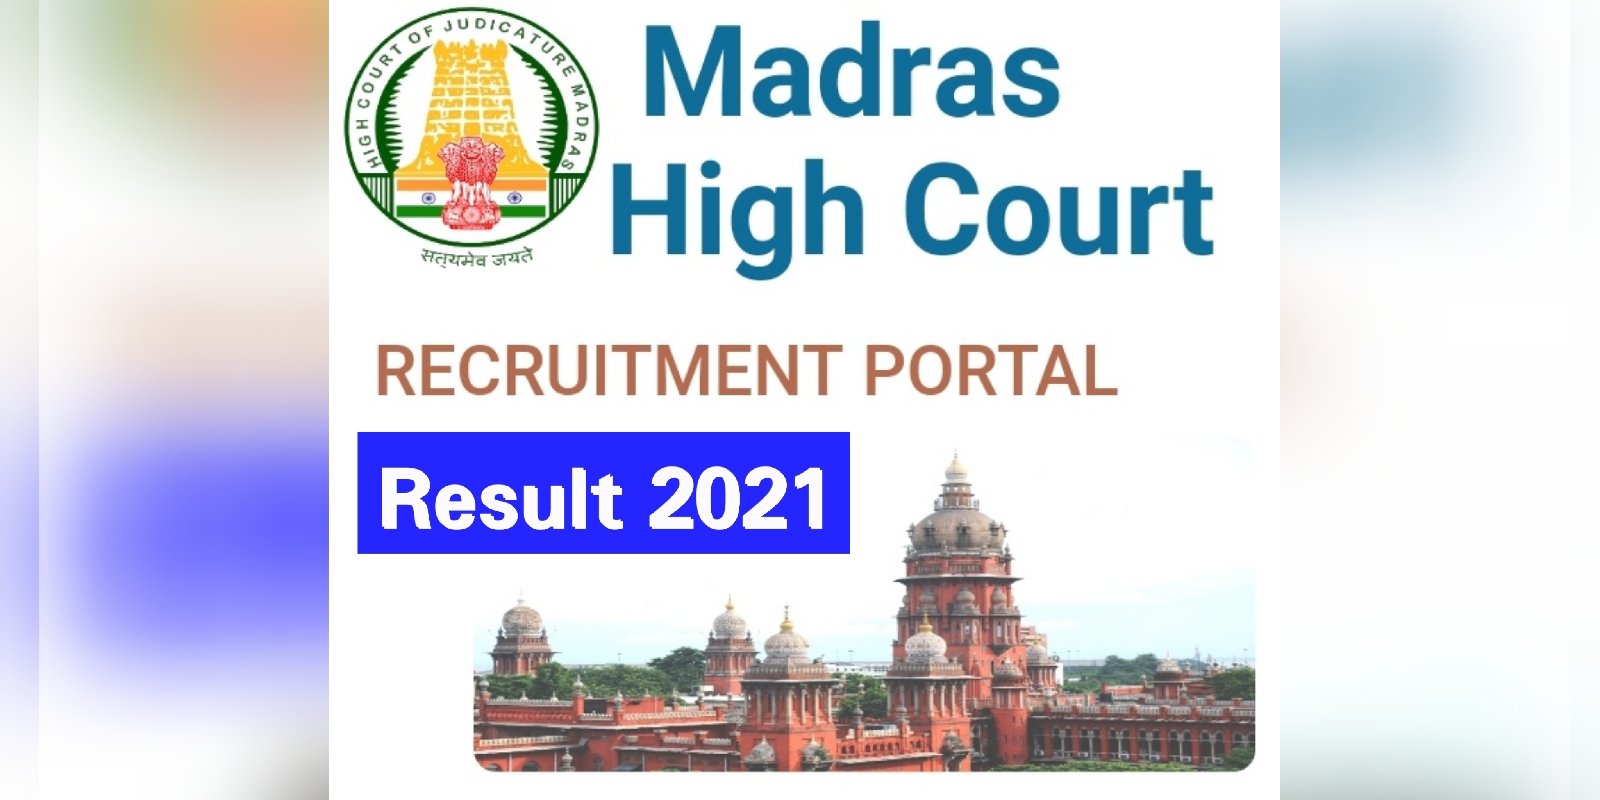 Madras High Court Result Link